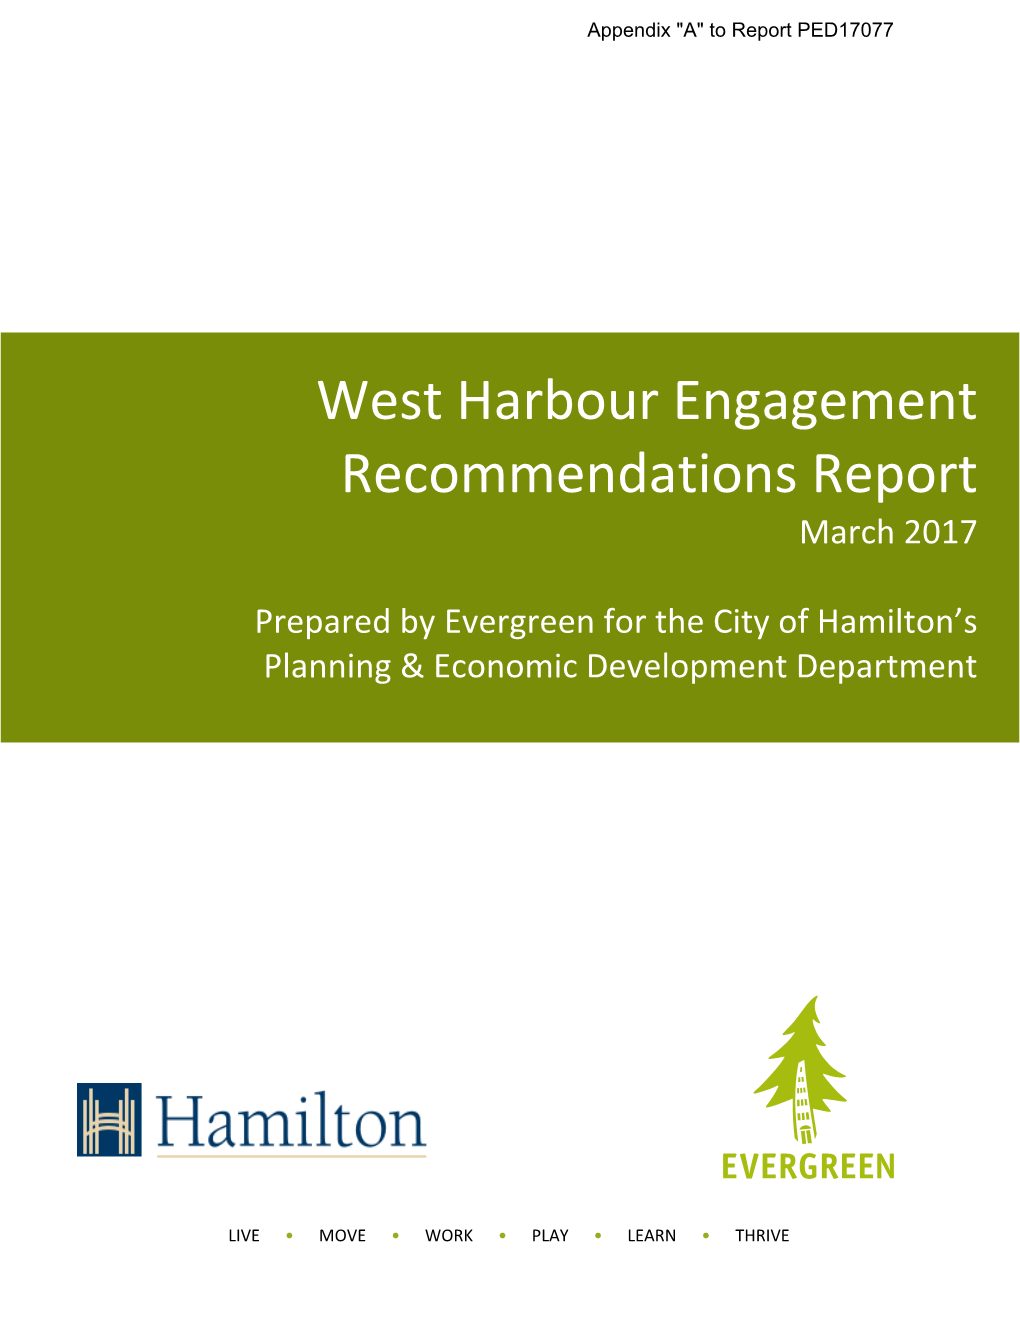 West Harbour Engagement Recommendations Report